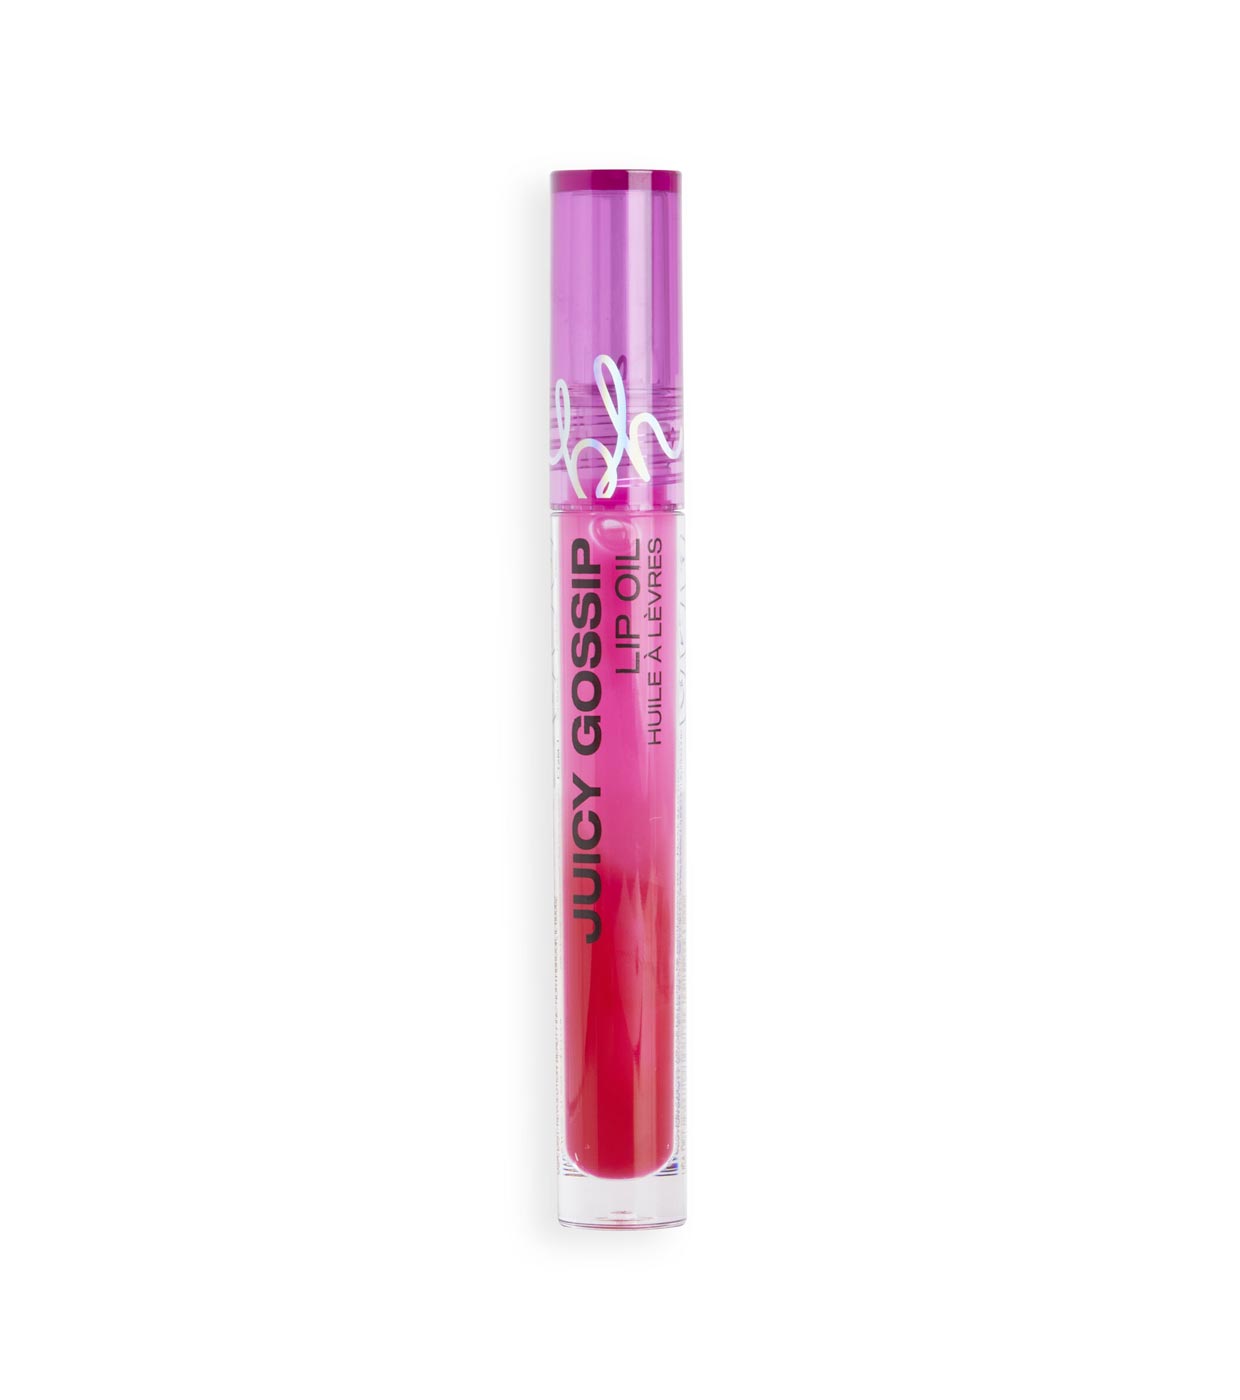 BH Cosmetics - Lip Oil Juicy Gossip - Candy Cherry